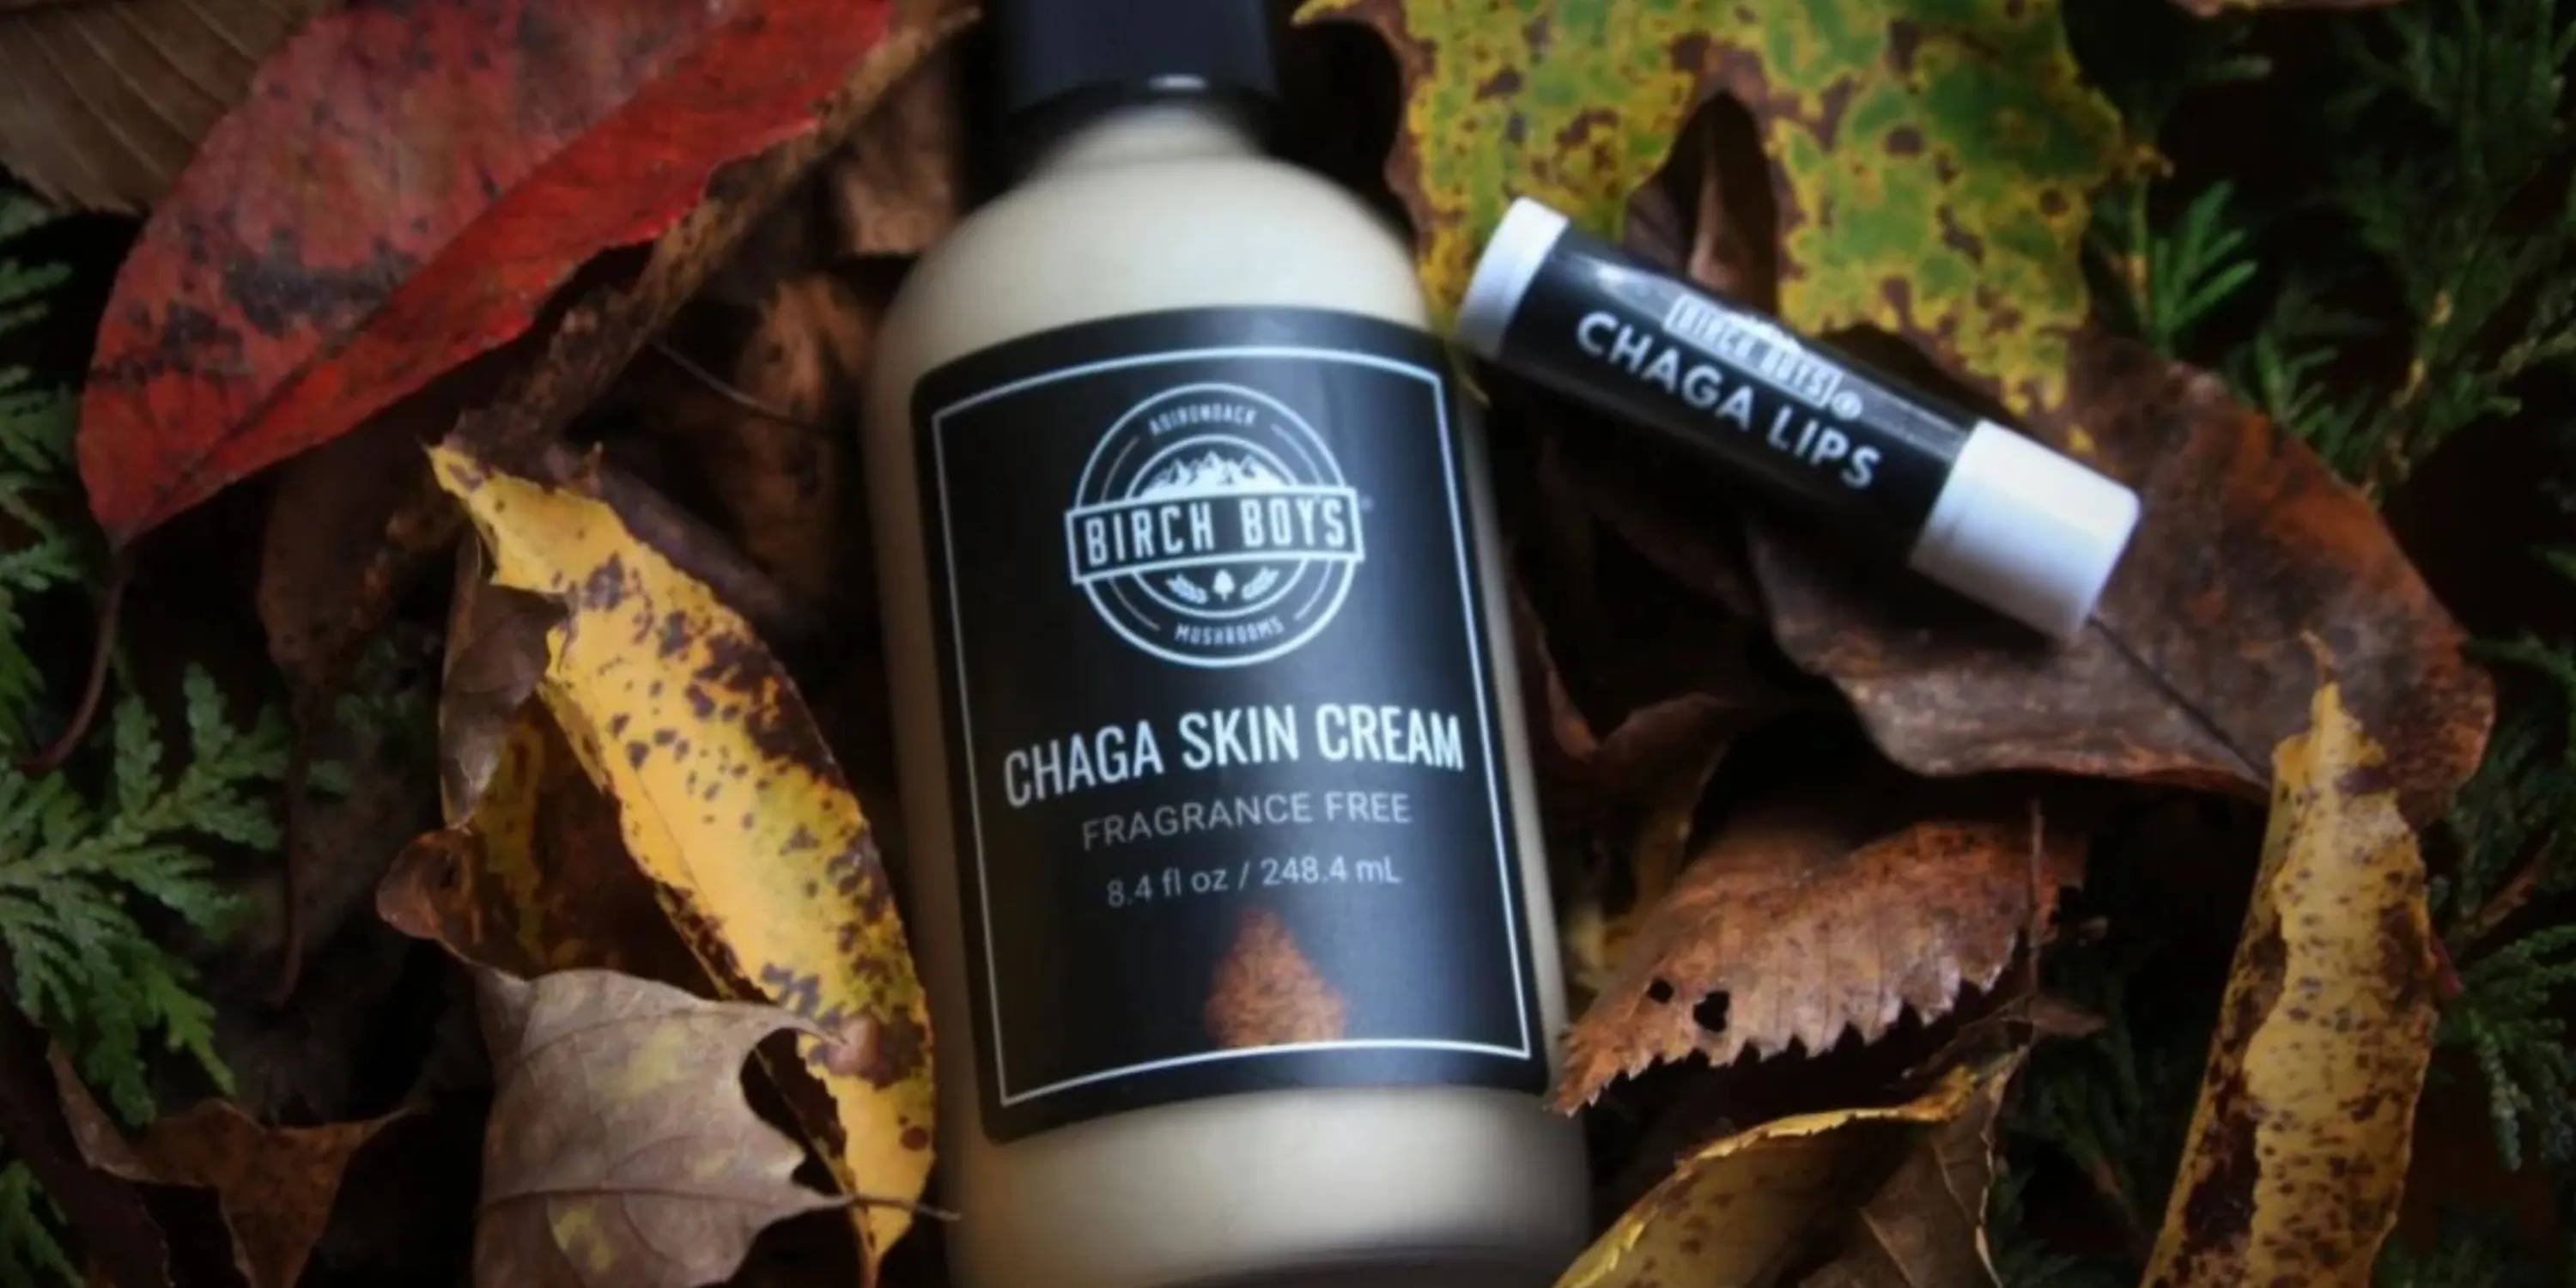 Chaga Skin Cream and Chaga Lip Balm on a bed of autumn fall leaves